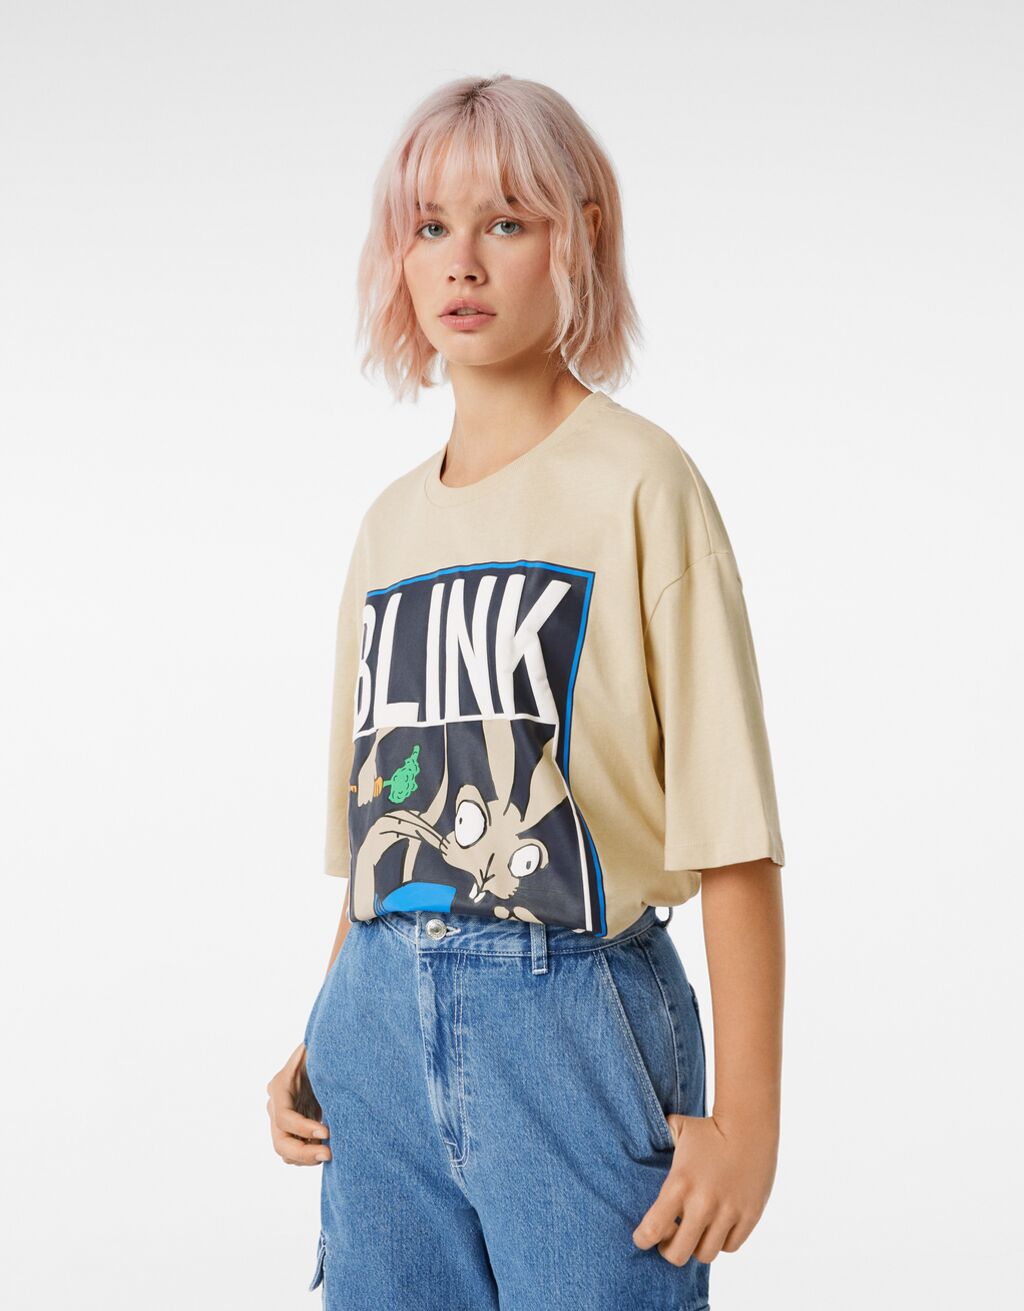 Oversize-T-Shirt mit Print „Blink182“